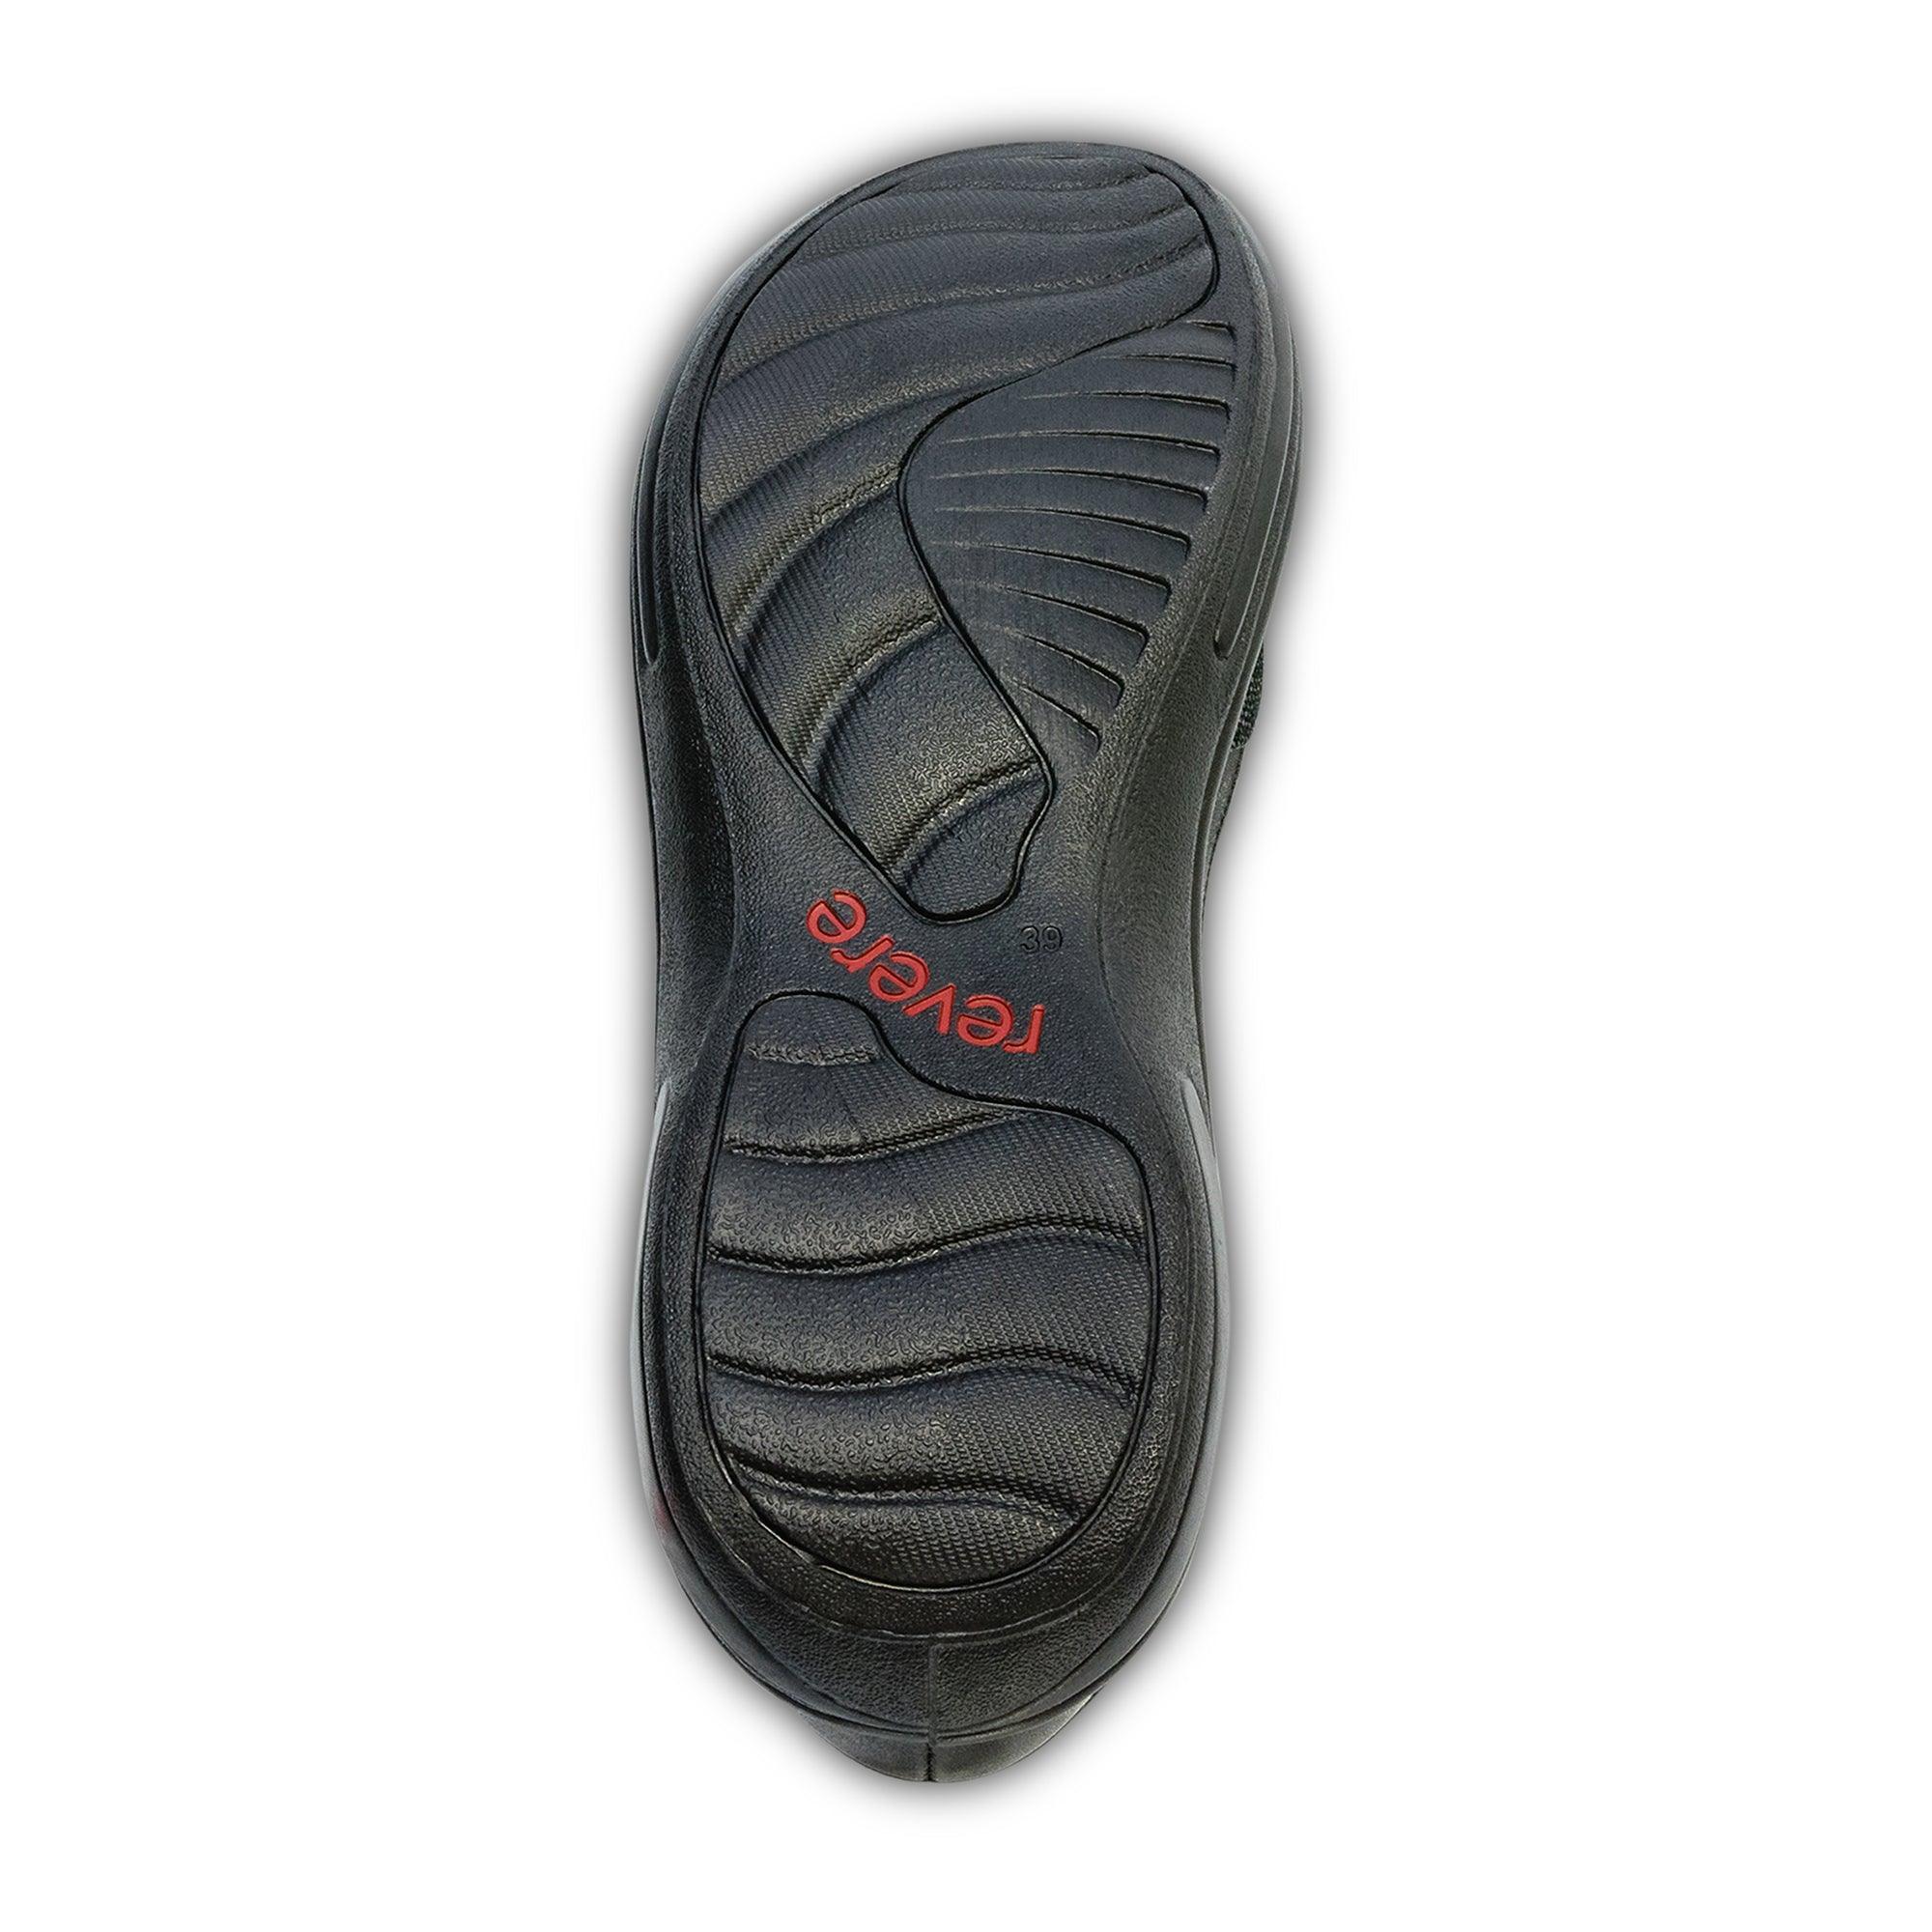 Rio Slide Sandals On Sale - Revere Shoes